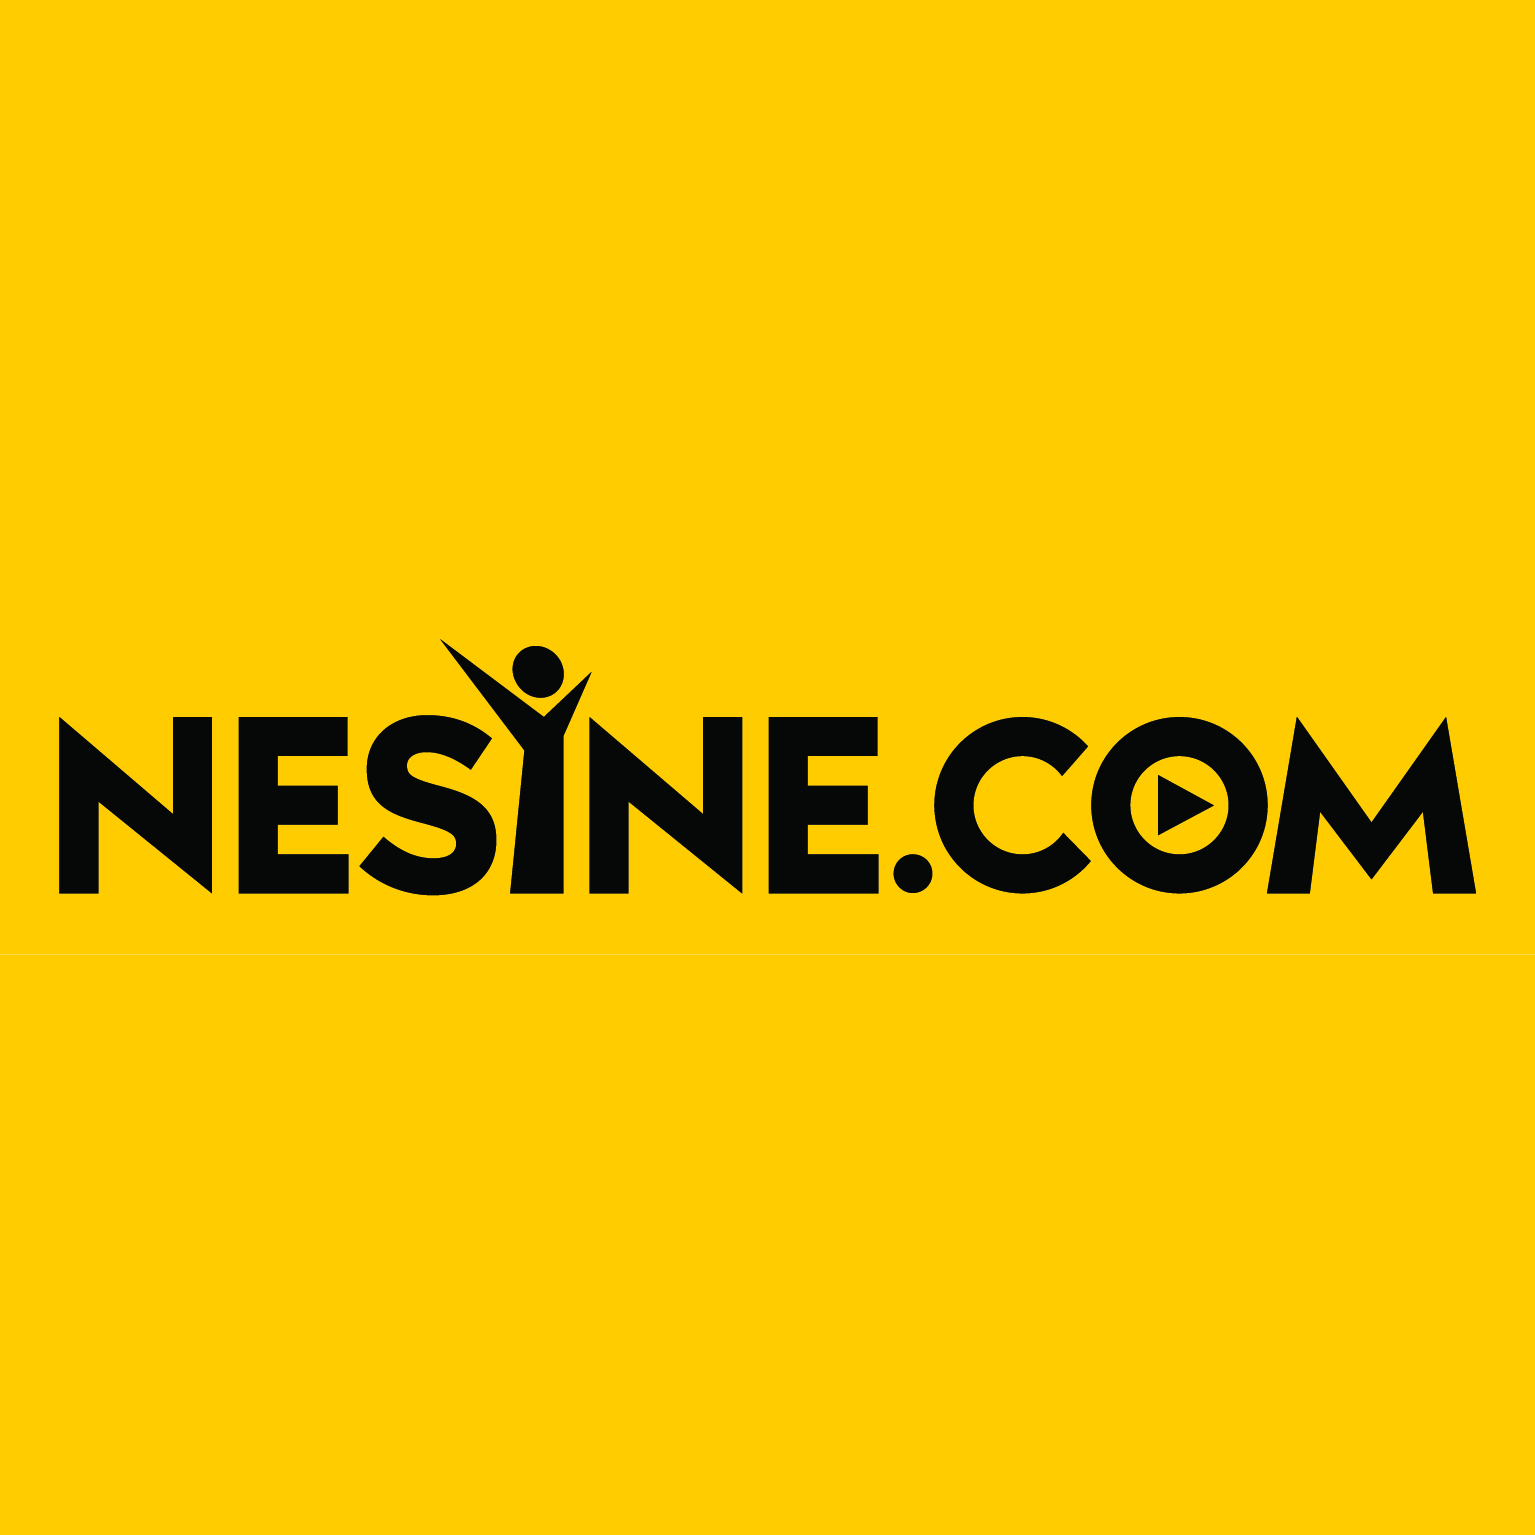 Nesine.com Logo PNG vector in SVG, PDF, AI, CDR format